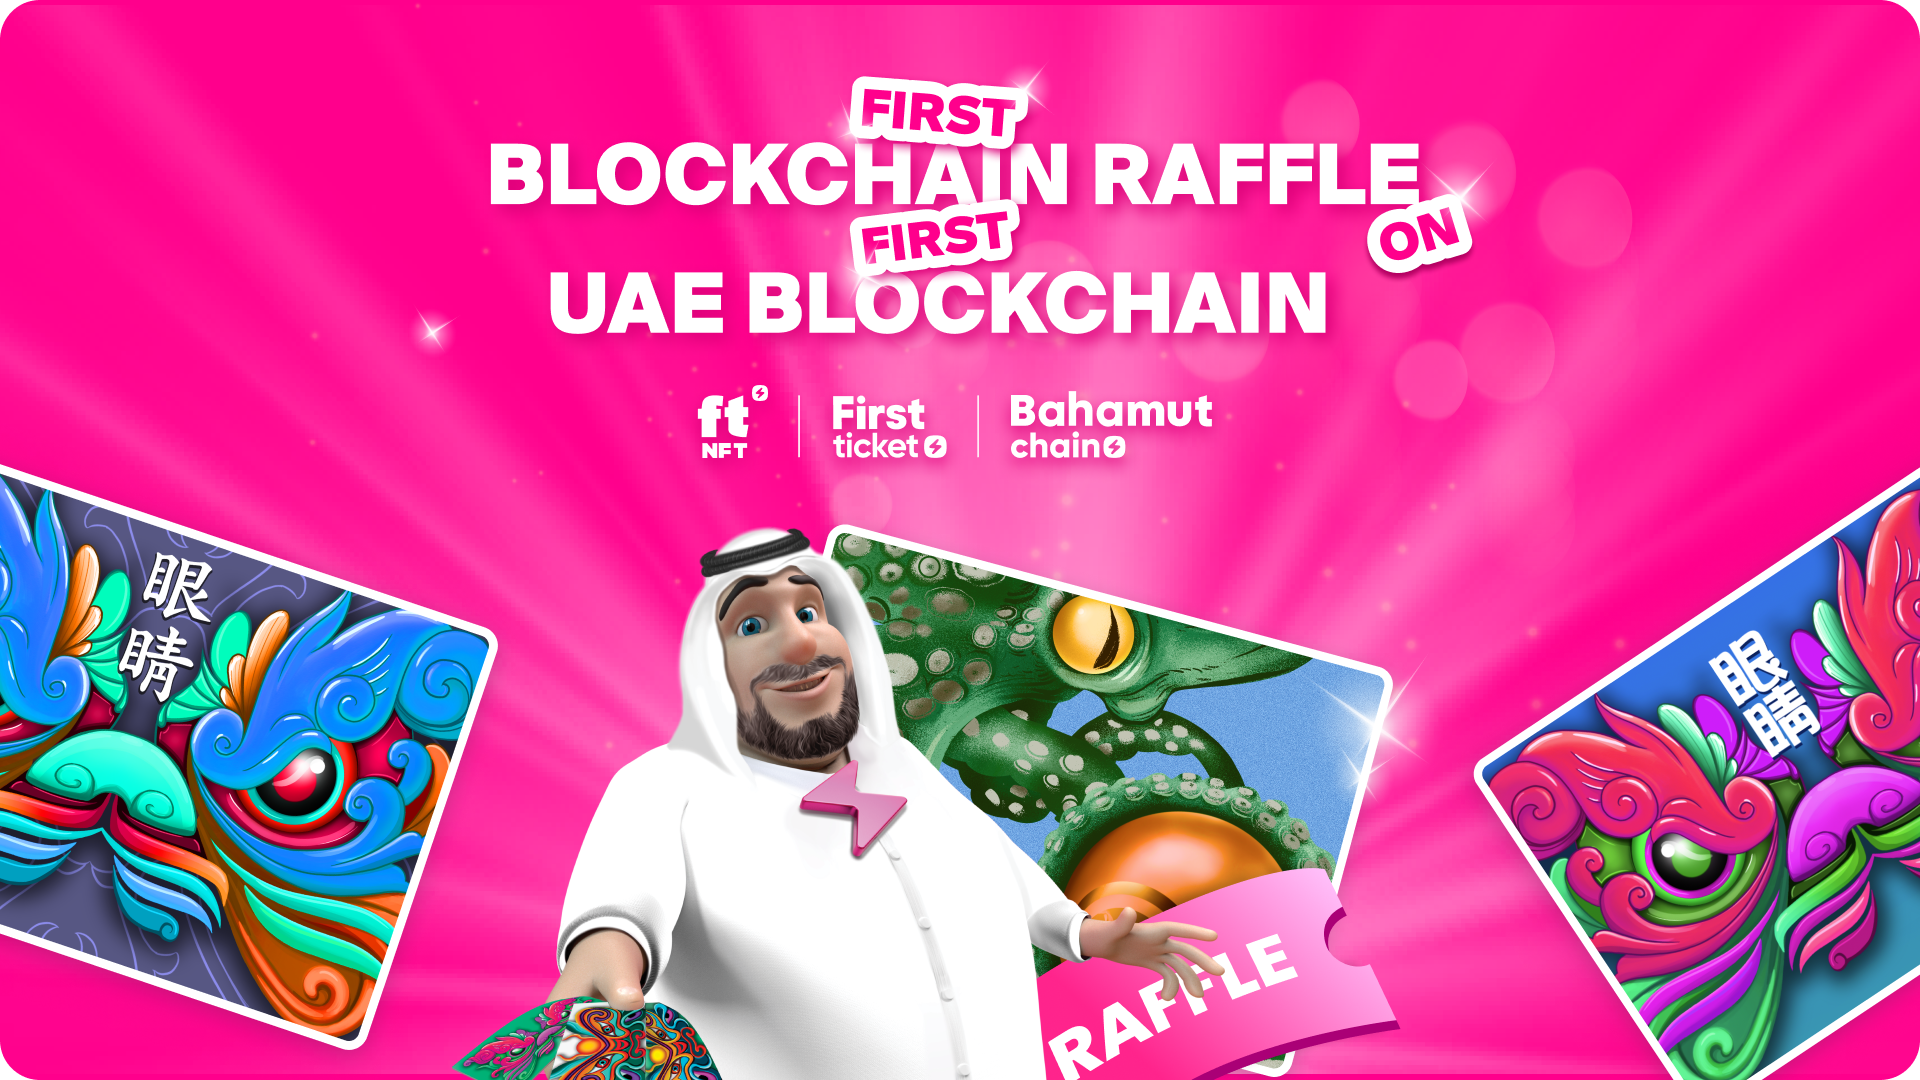 ftNFT Announces Raffle on the first UAE Blockchain, Bahamut